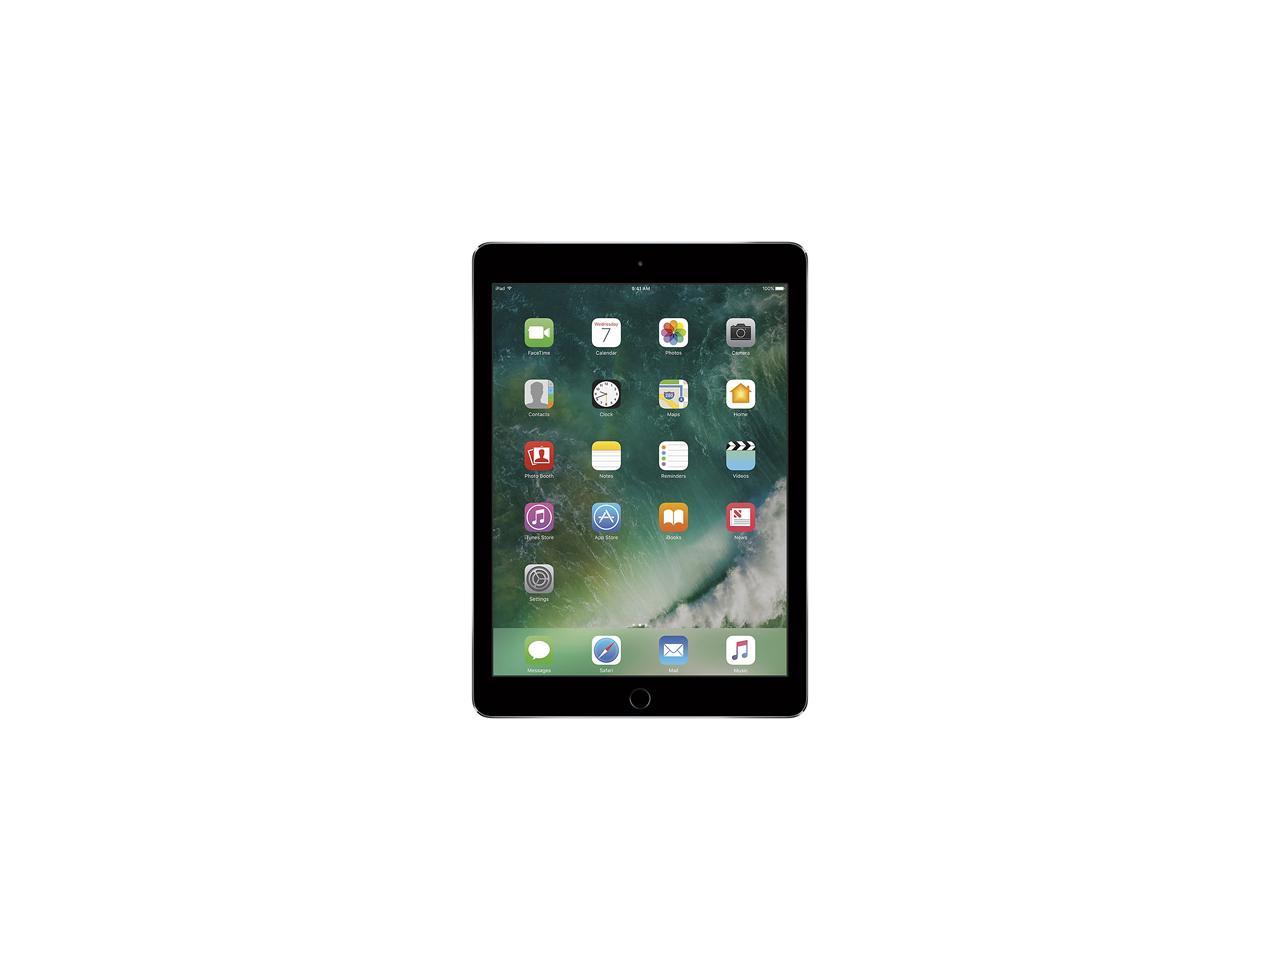 Apple iPad Air 2 MNV22LL/A Apple A8X 32 GB Flash Storage 9.7